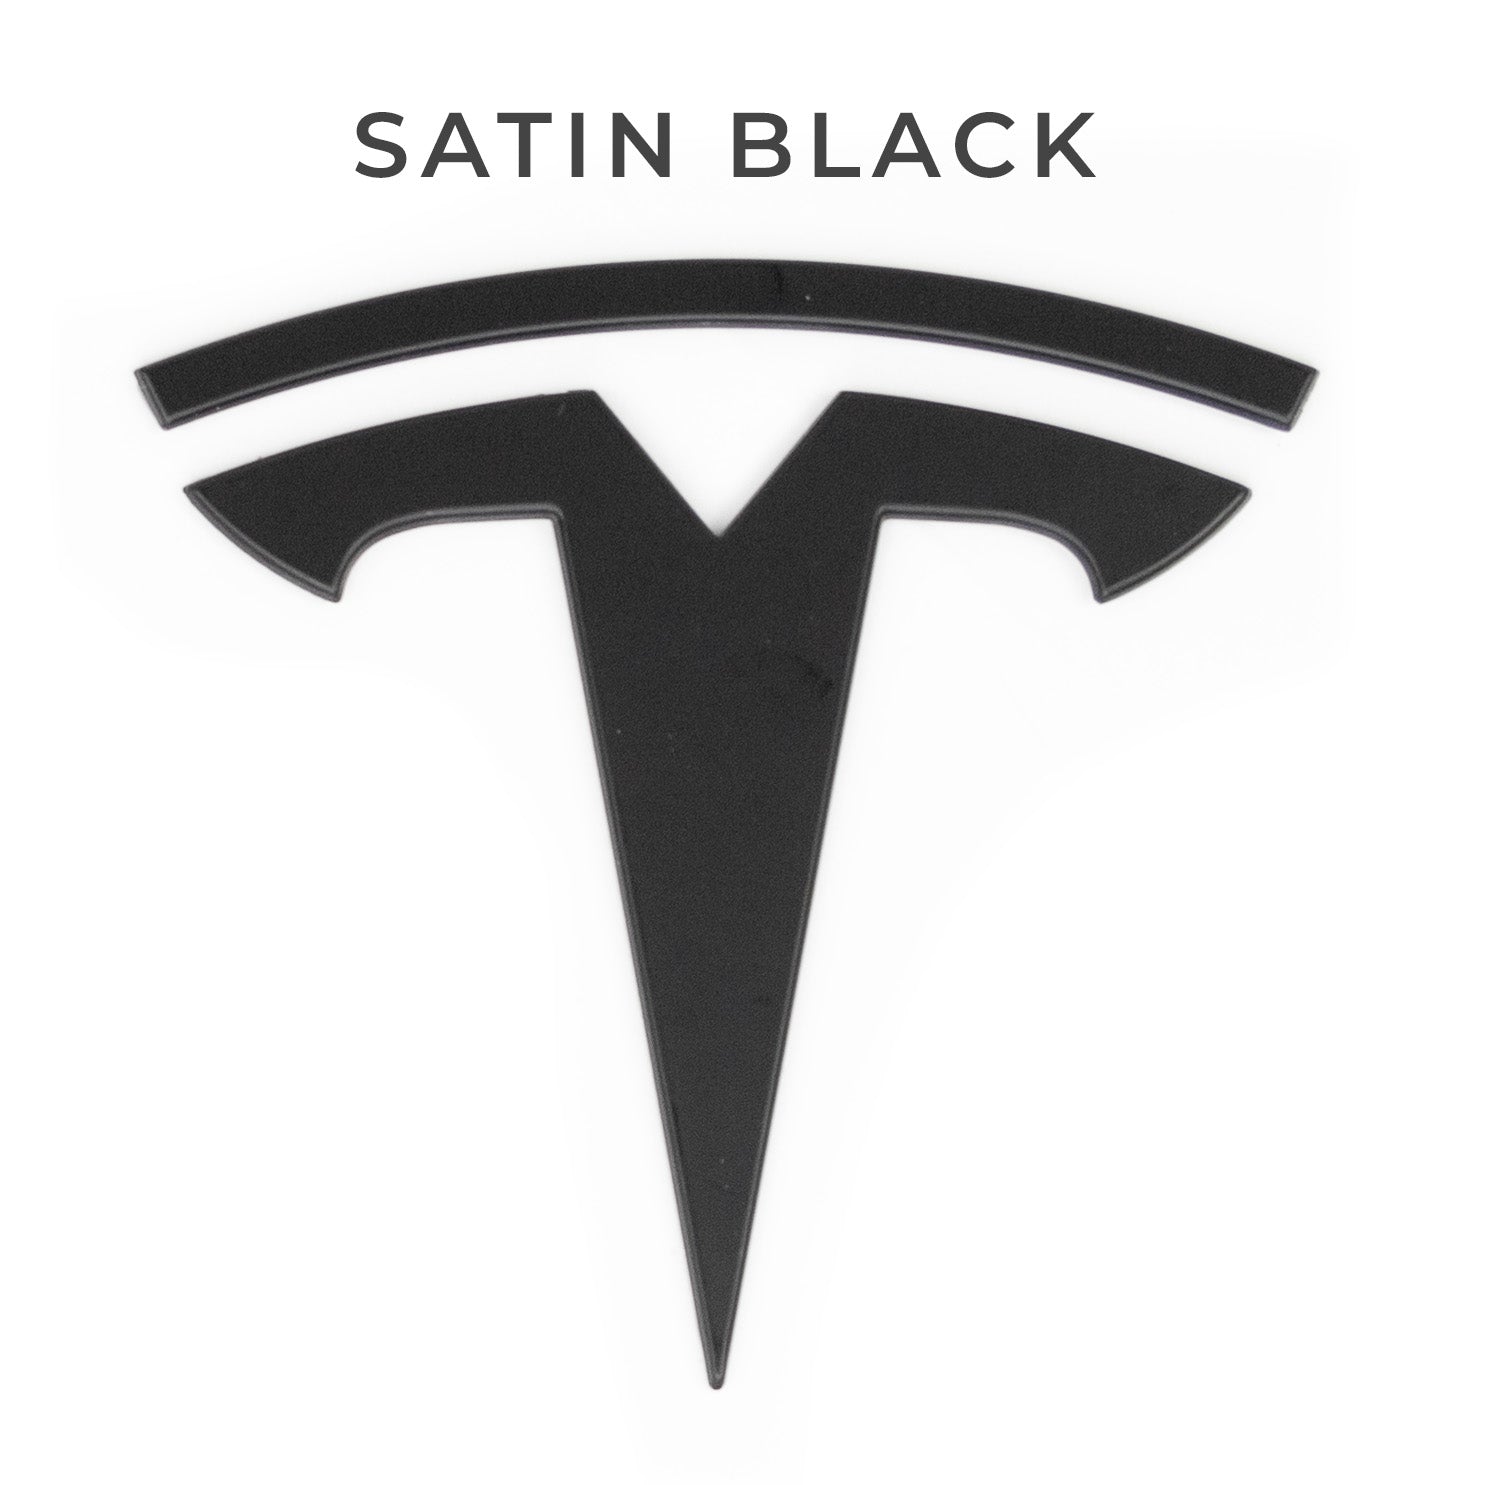 Tesla brand logo car symbol black and white design